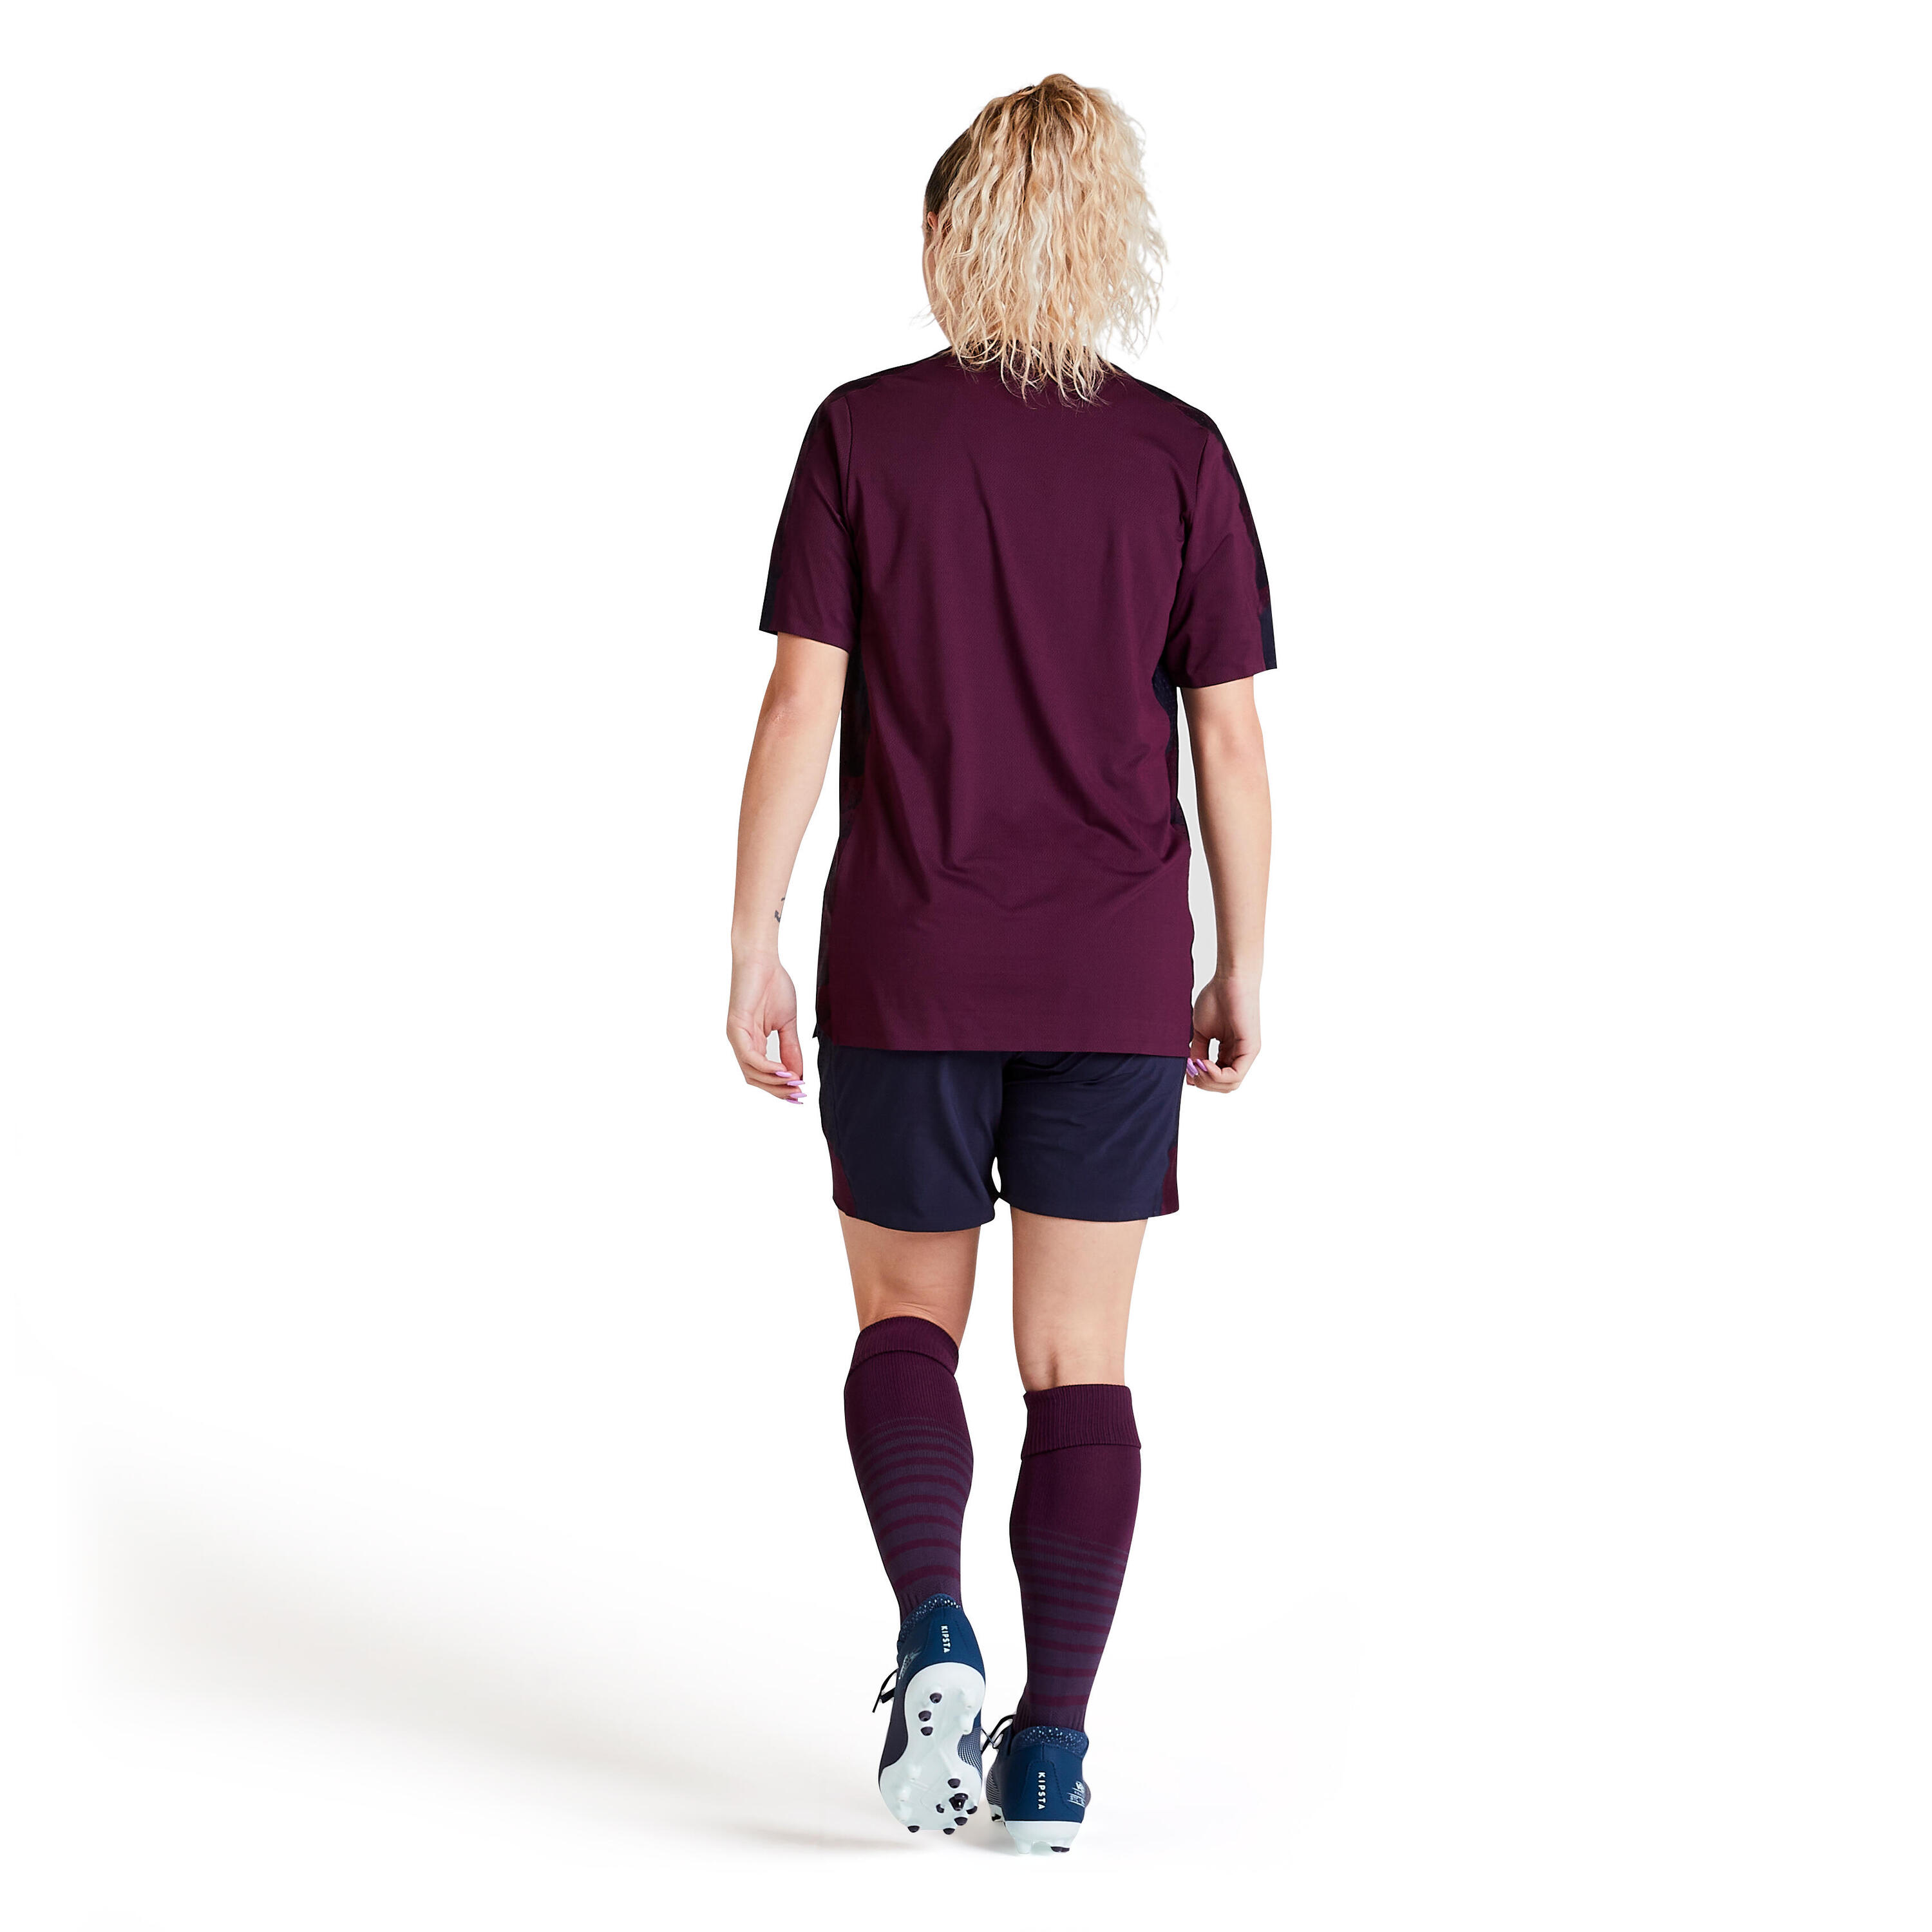 Women's Football Shorts F900 - Blue/Black 12/25